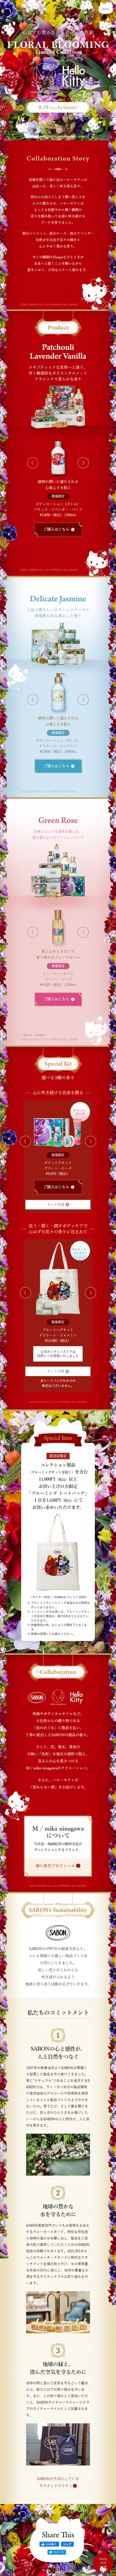 SABON × M / mika ninagawa × Hello Kitty「FLORAL BLOOMING Limited Collection」_sp_1